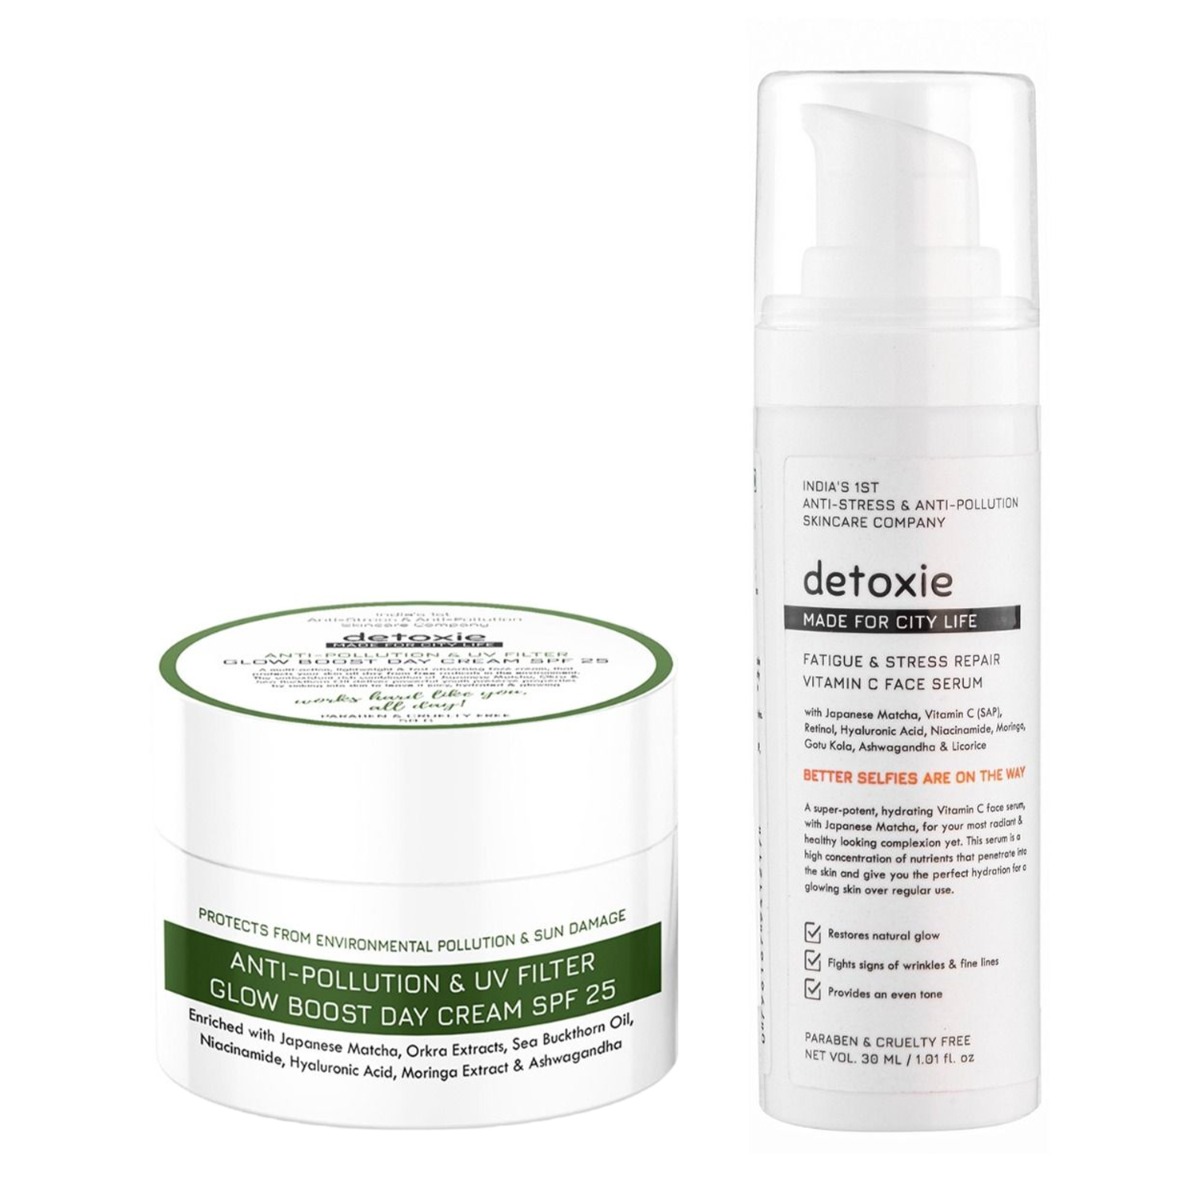 Detoxie Anti-Pollution & UV Filter, Glow Boost Day Cream SPF 25, 50gm &  Vitamin C Face Serum, 30ml